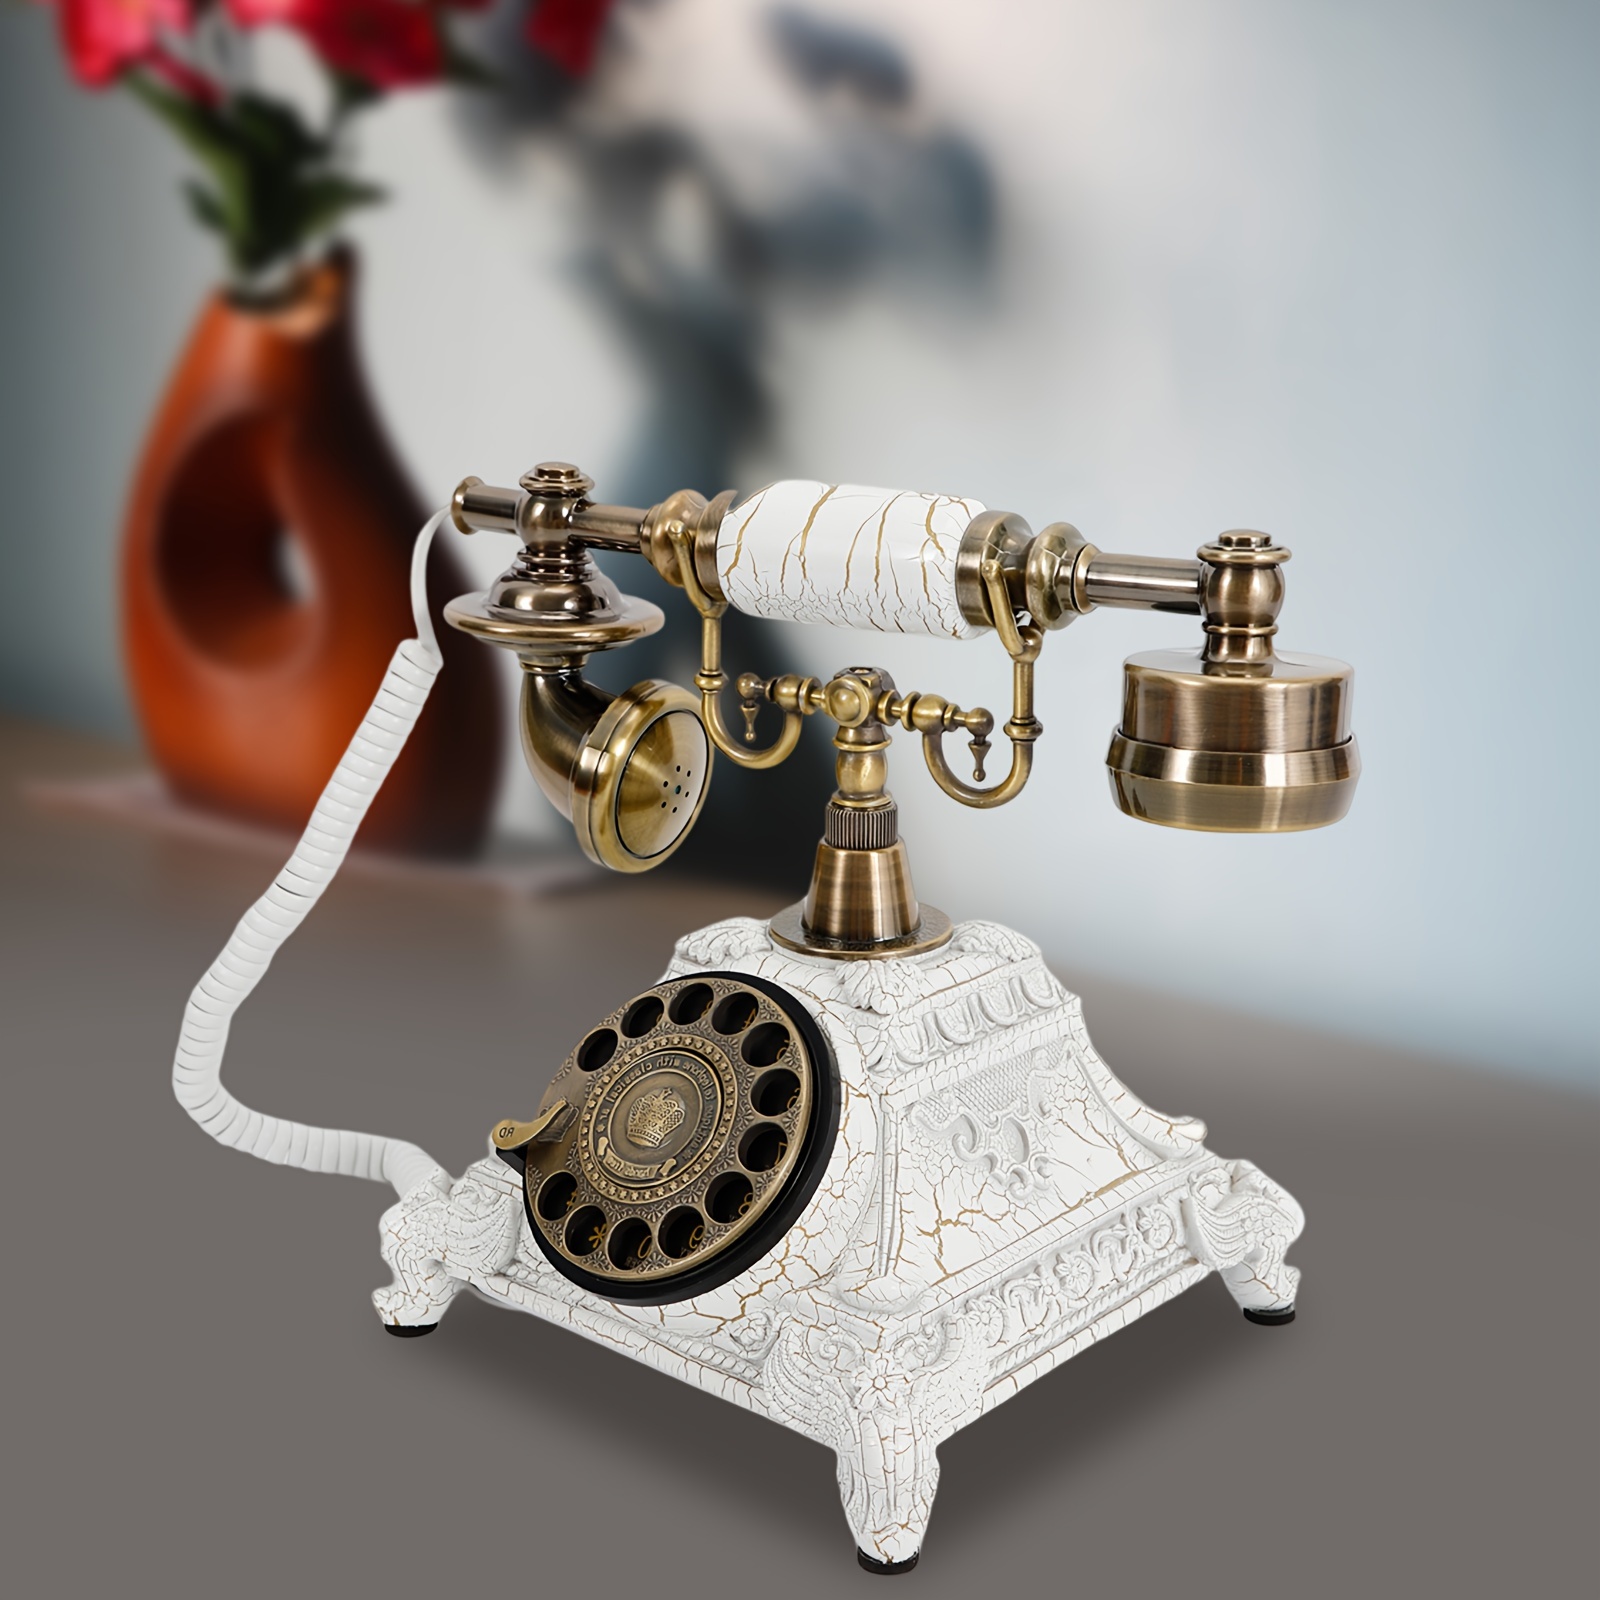 

Vintage Telephone Antique Desk Phone Corded Retro Phone Rotary Antique Dial